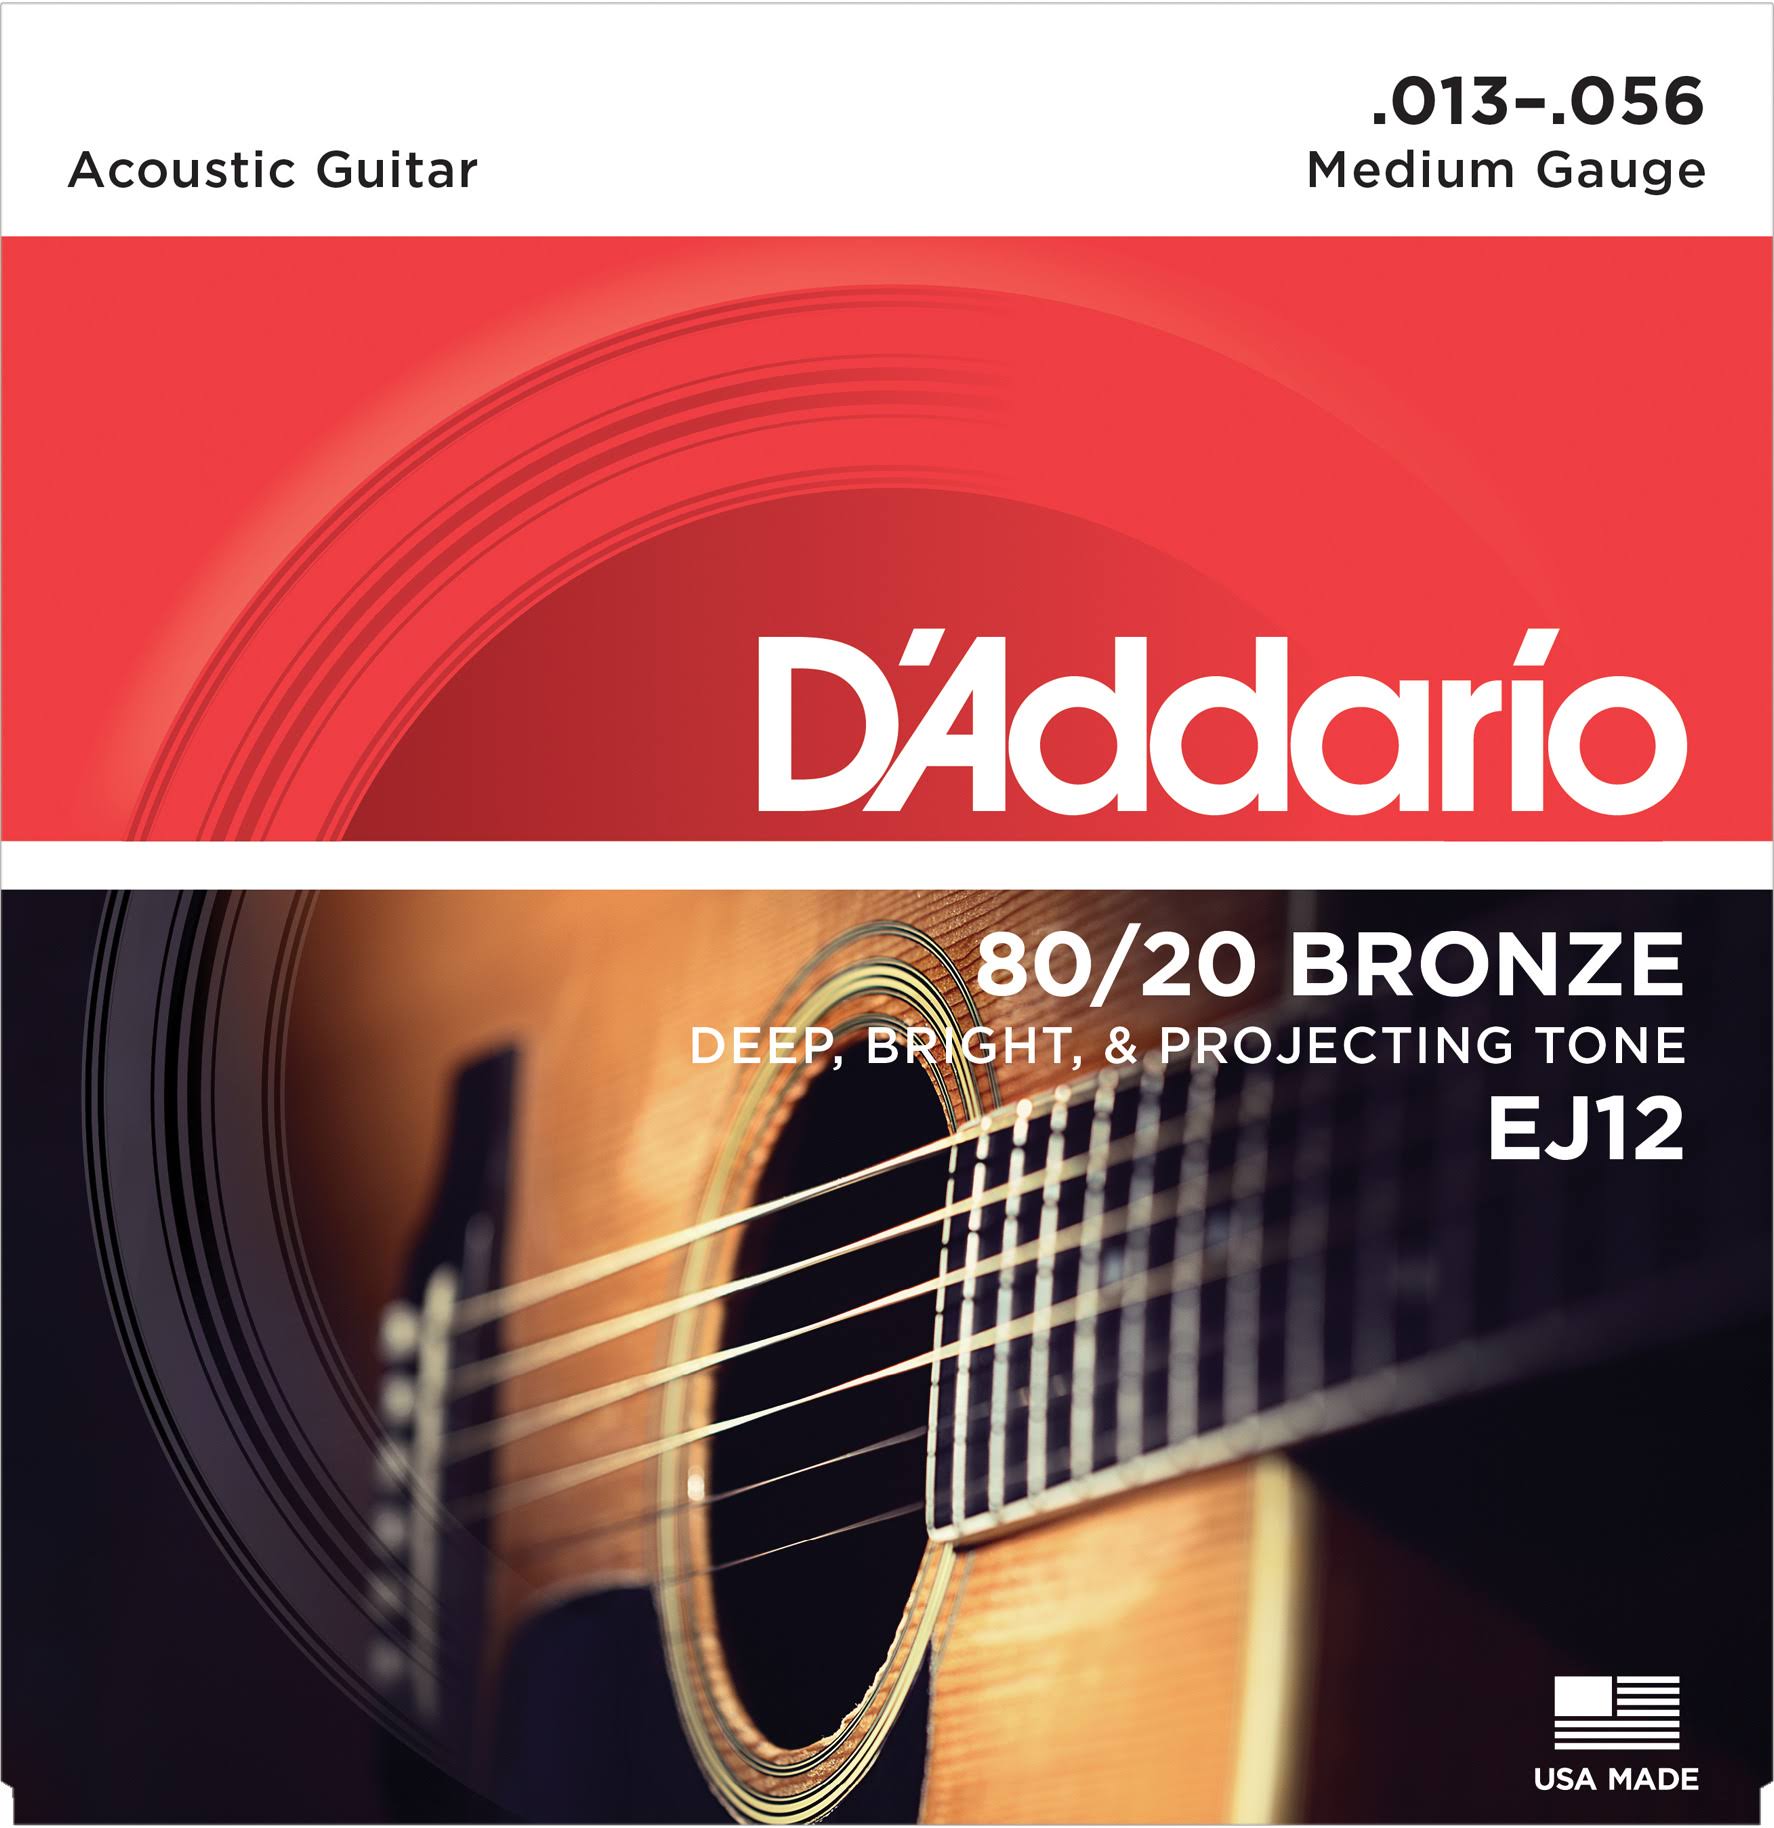 D'Addario EJ12 80/20 Bronze Acoustic Guitar Strings - Medium, 13-56